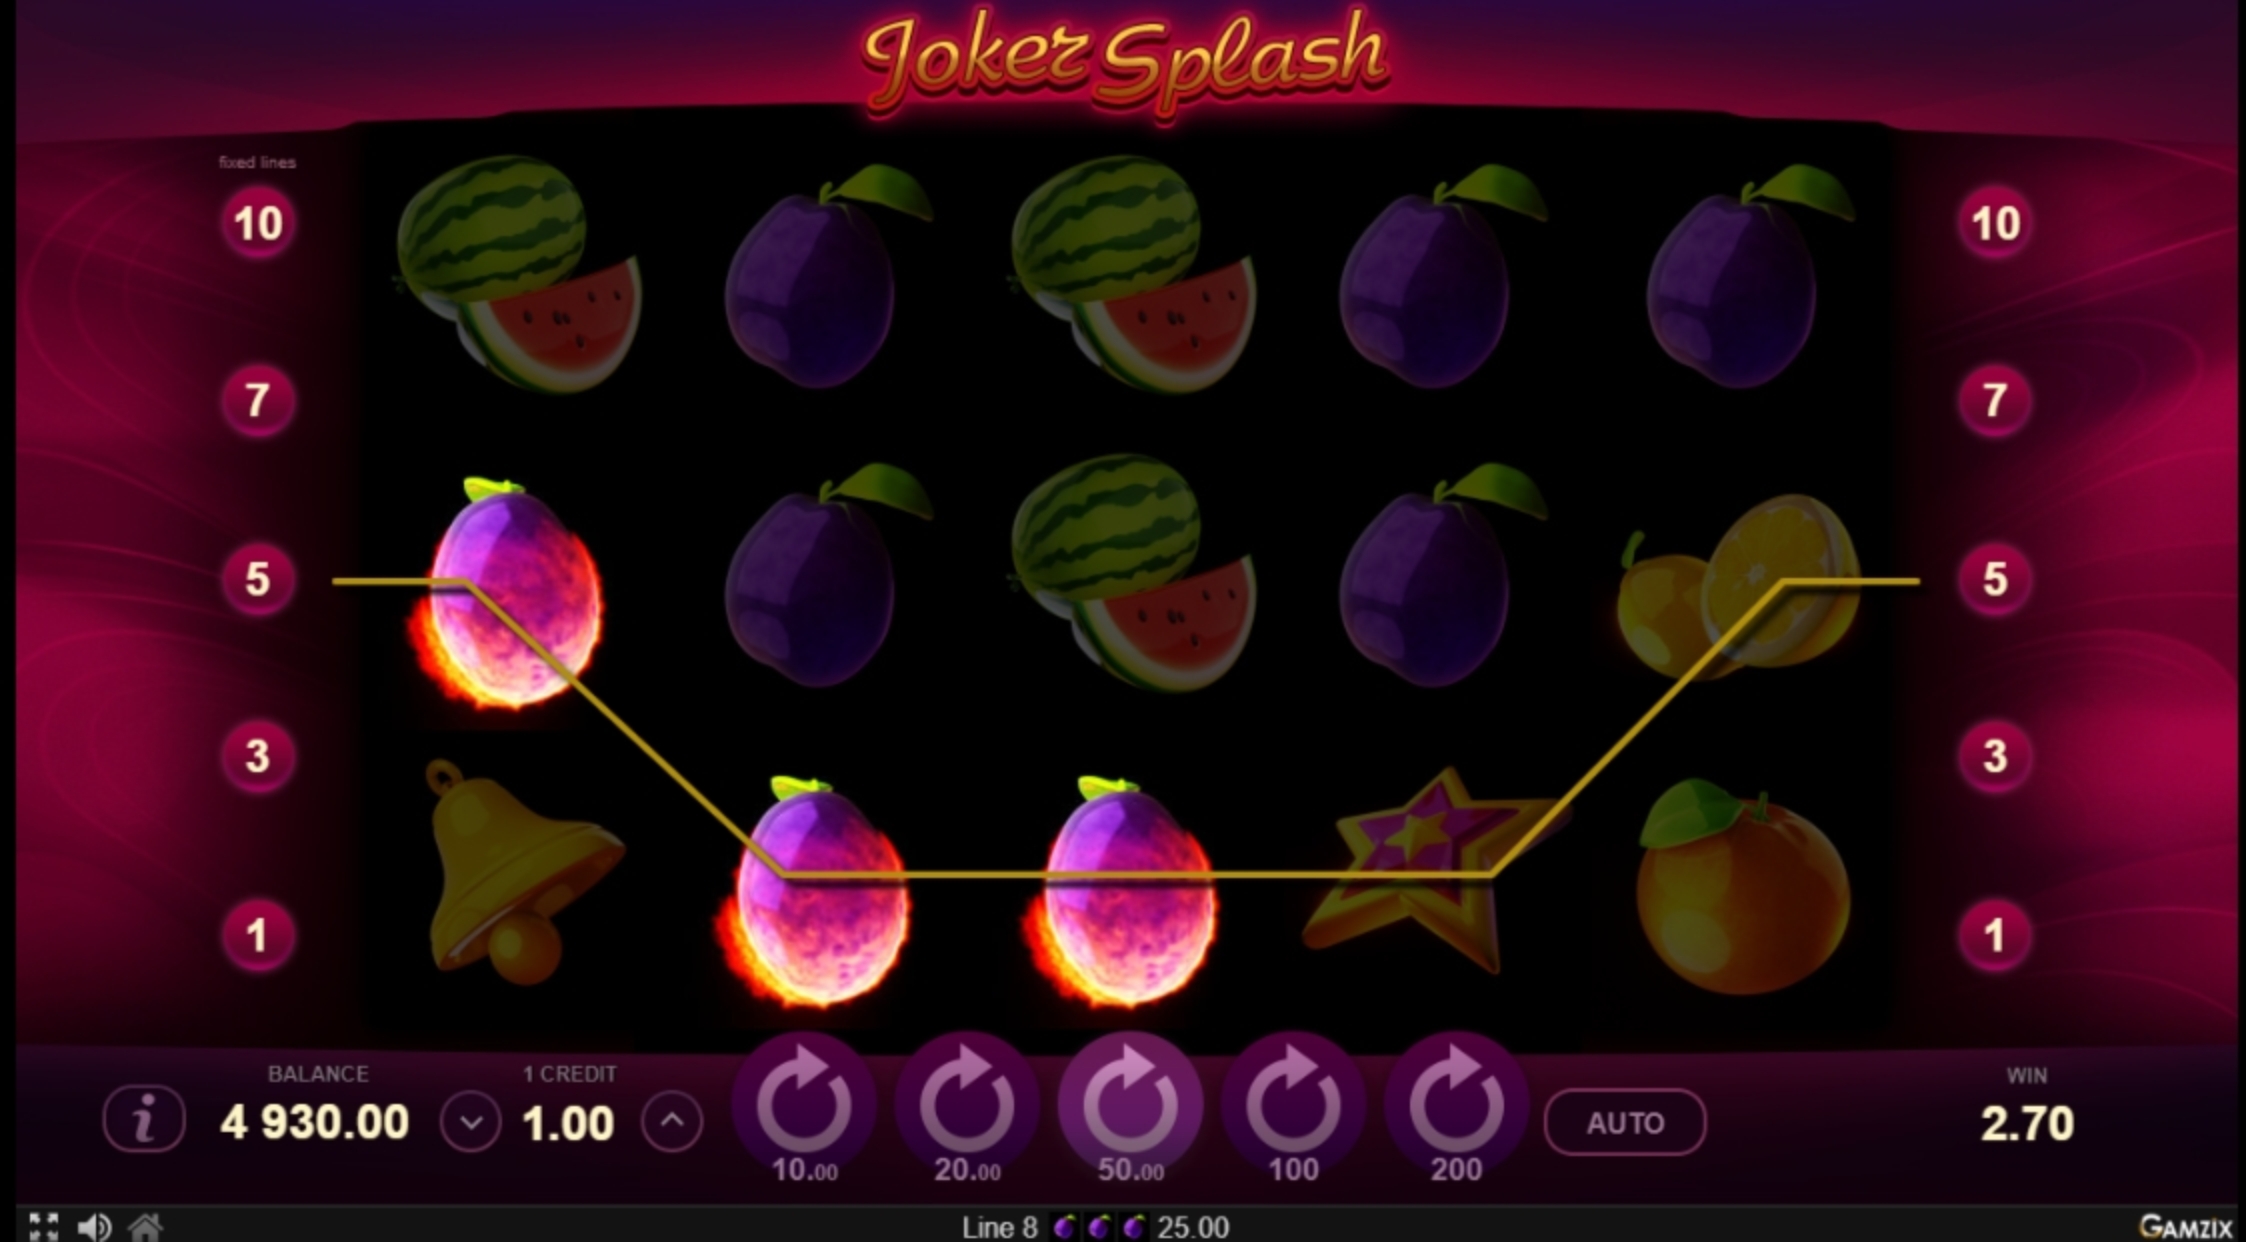 Win Money in Joker Splash Free Slot Game by Gamzix